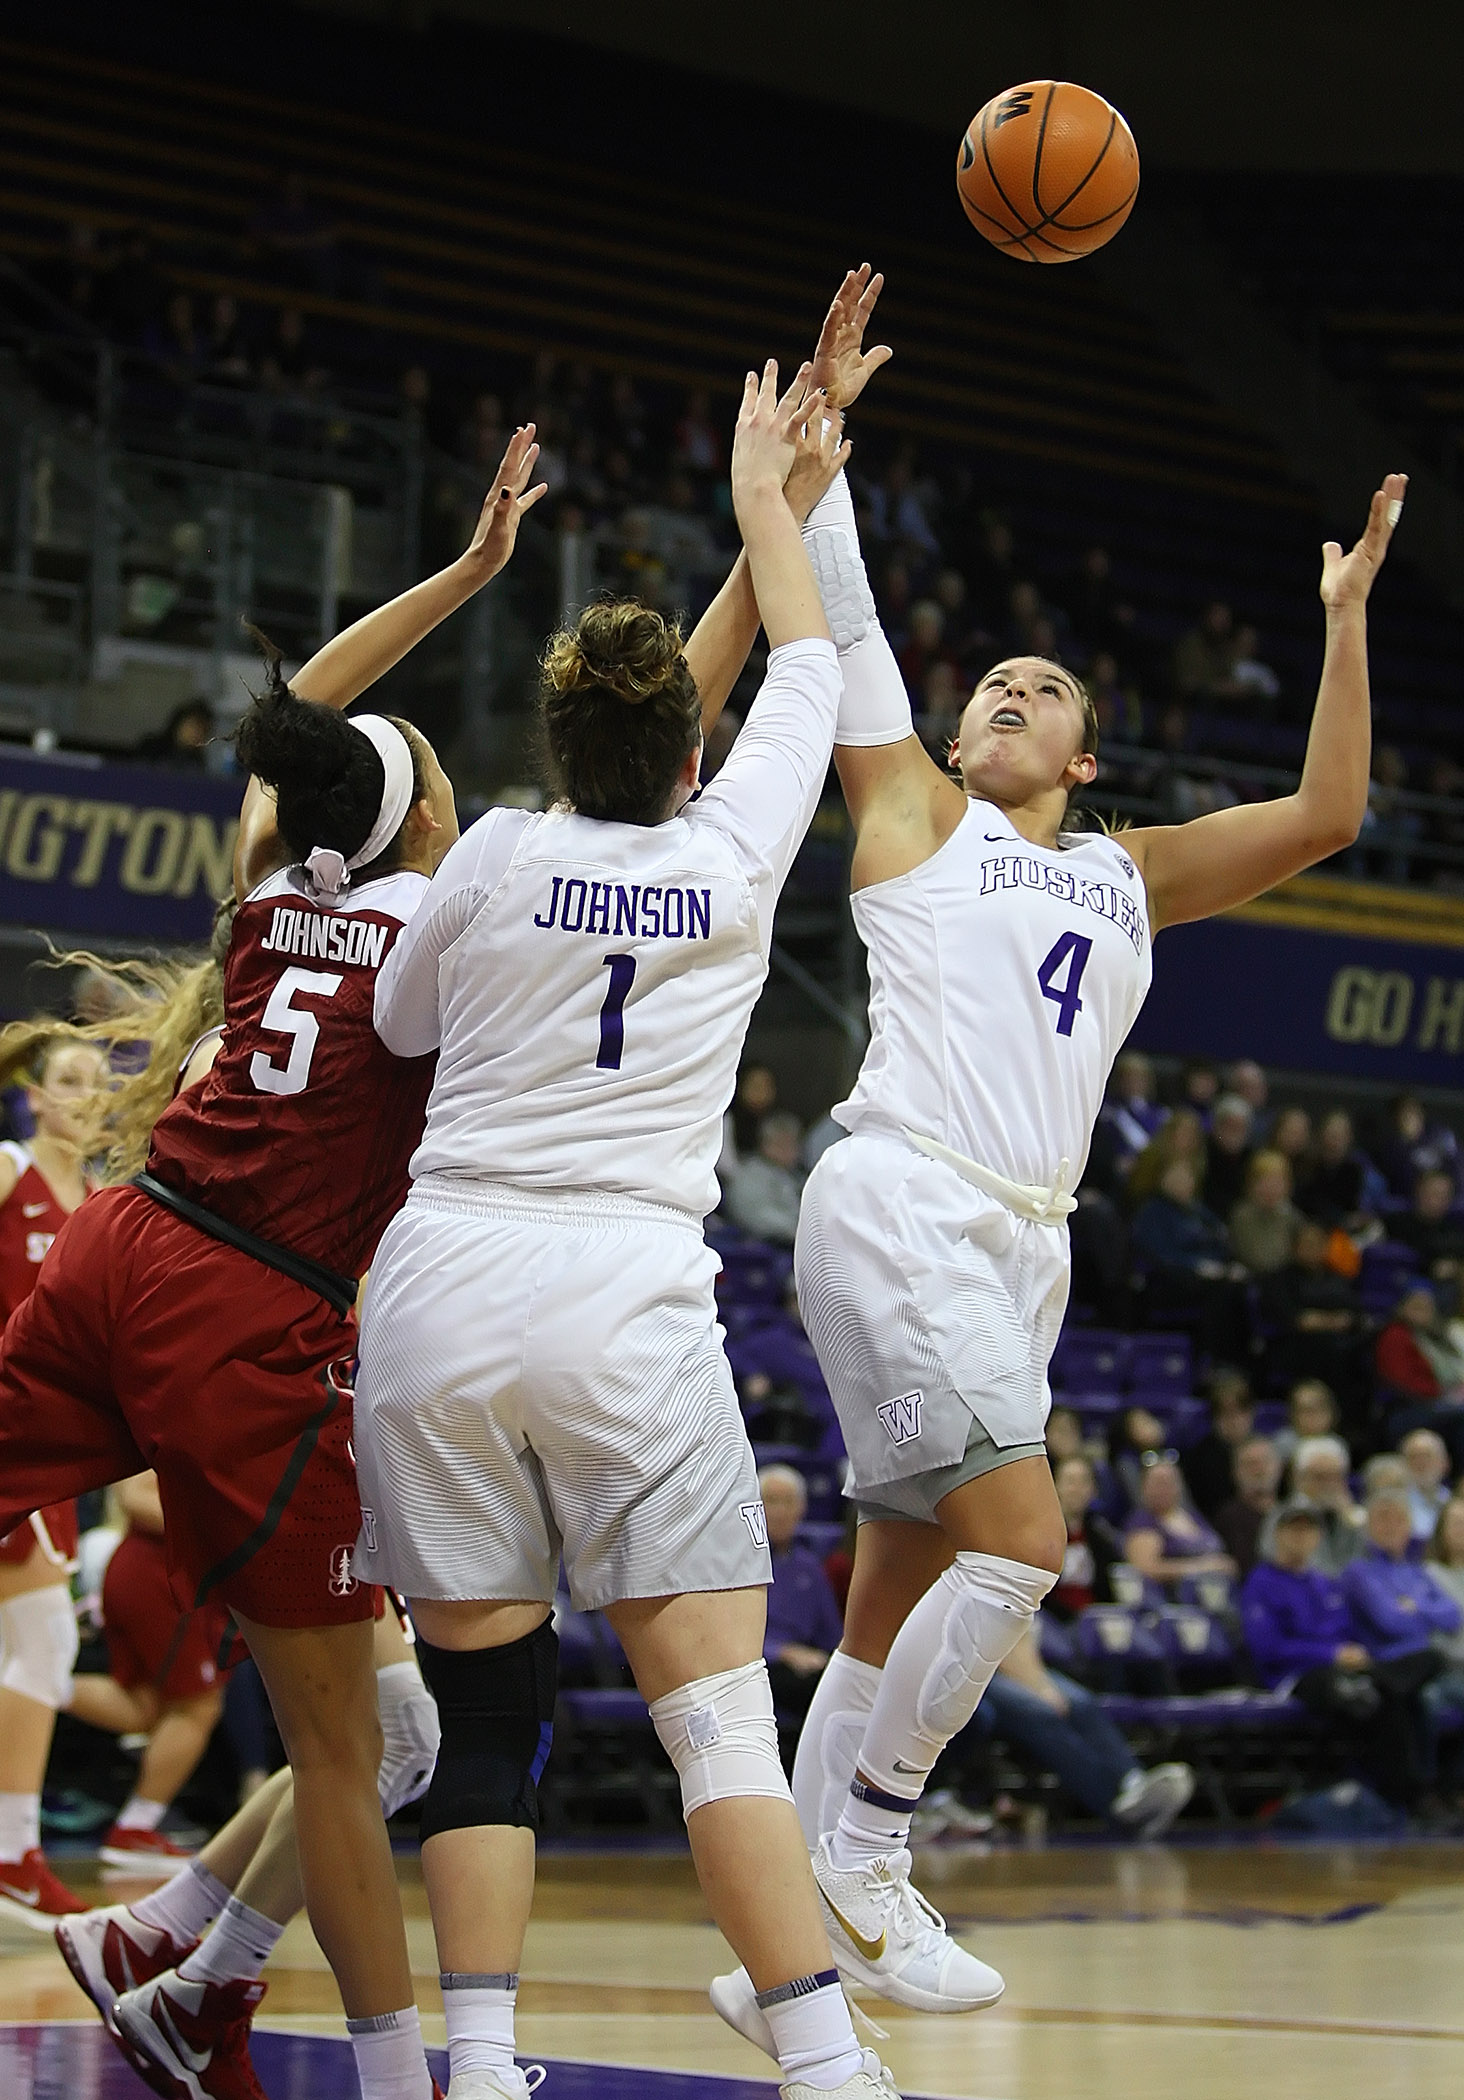 Amber Melgoza of Washington pulls down a rebound as Stanford’s Kaylee Johnson and Washington’s Hanna Johnson watch.